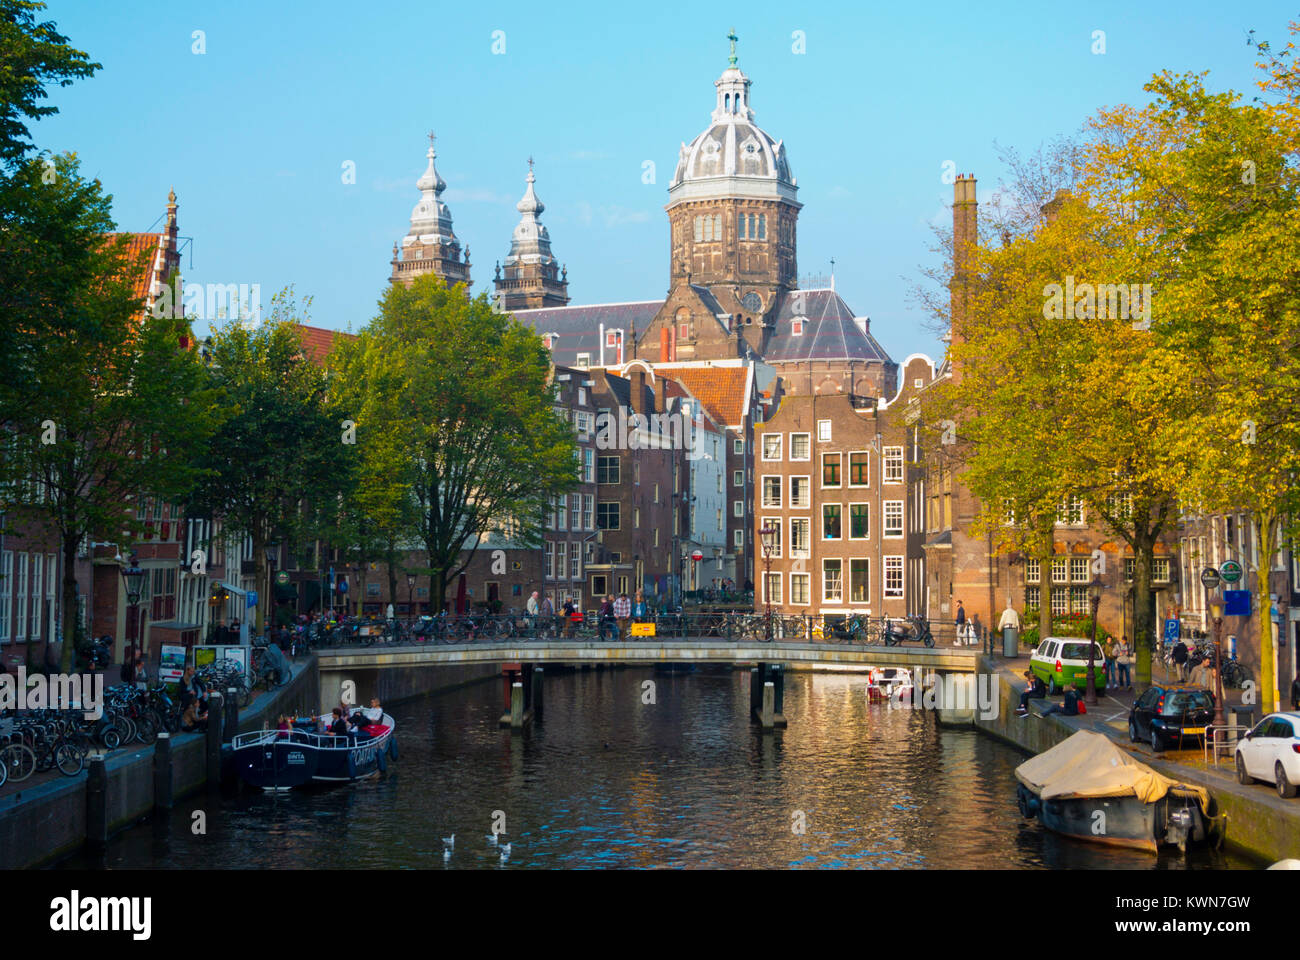 Oudezijds Voorburgwal canal, il quartiere a luci rosse di Amsterdam, Paesi Bassi Foto Stock